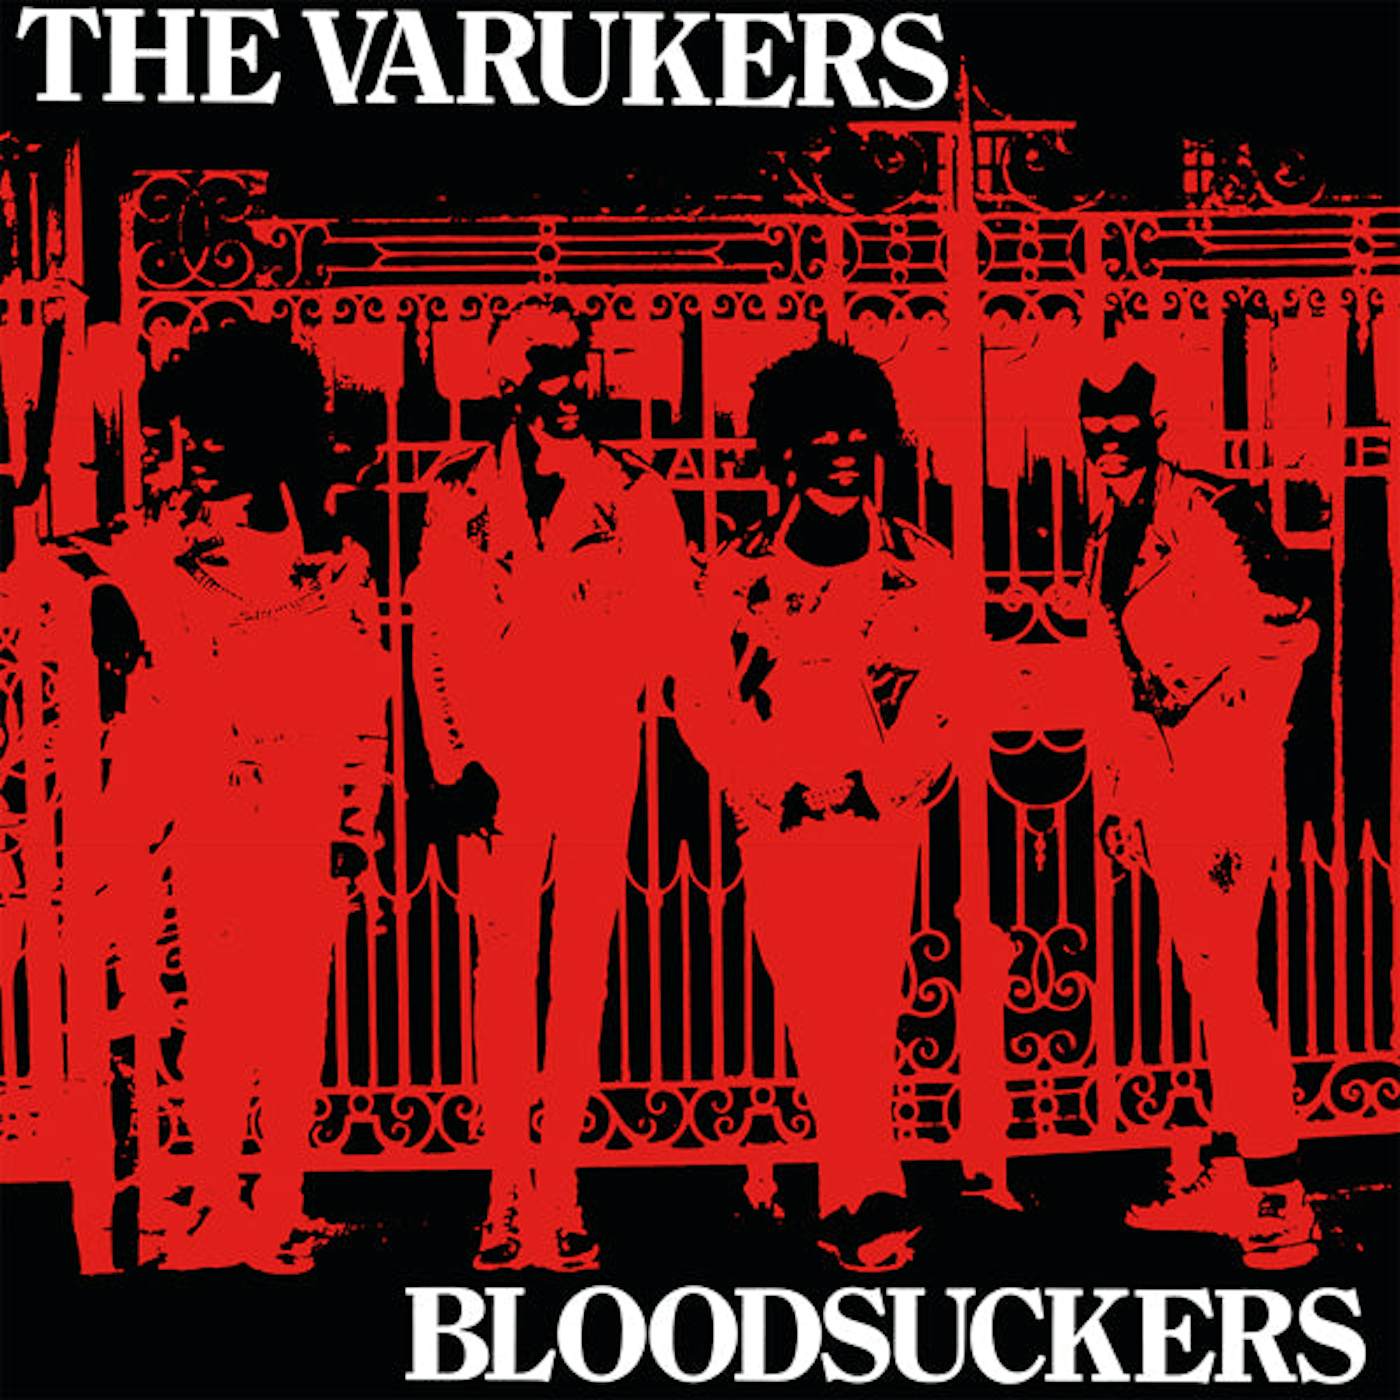 The Varukers BLOODSUCKERS (CLEAR VINYL) Vinyl Record